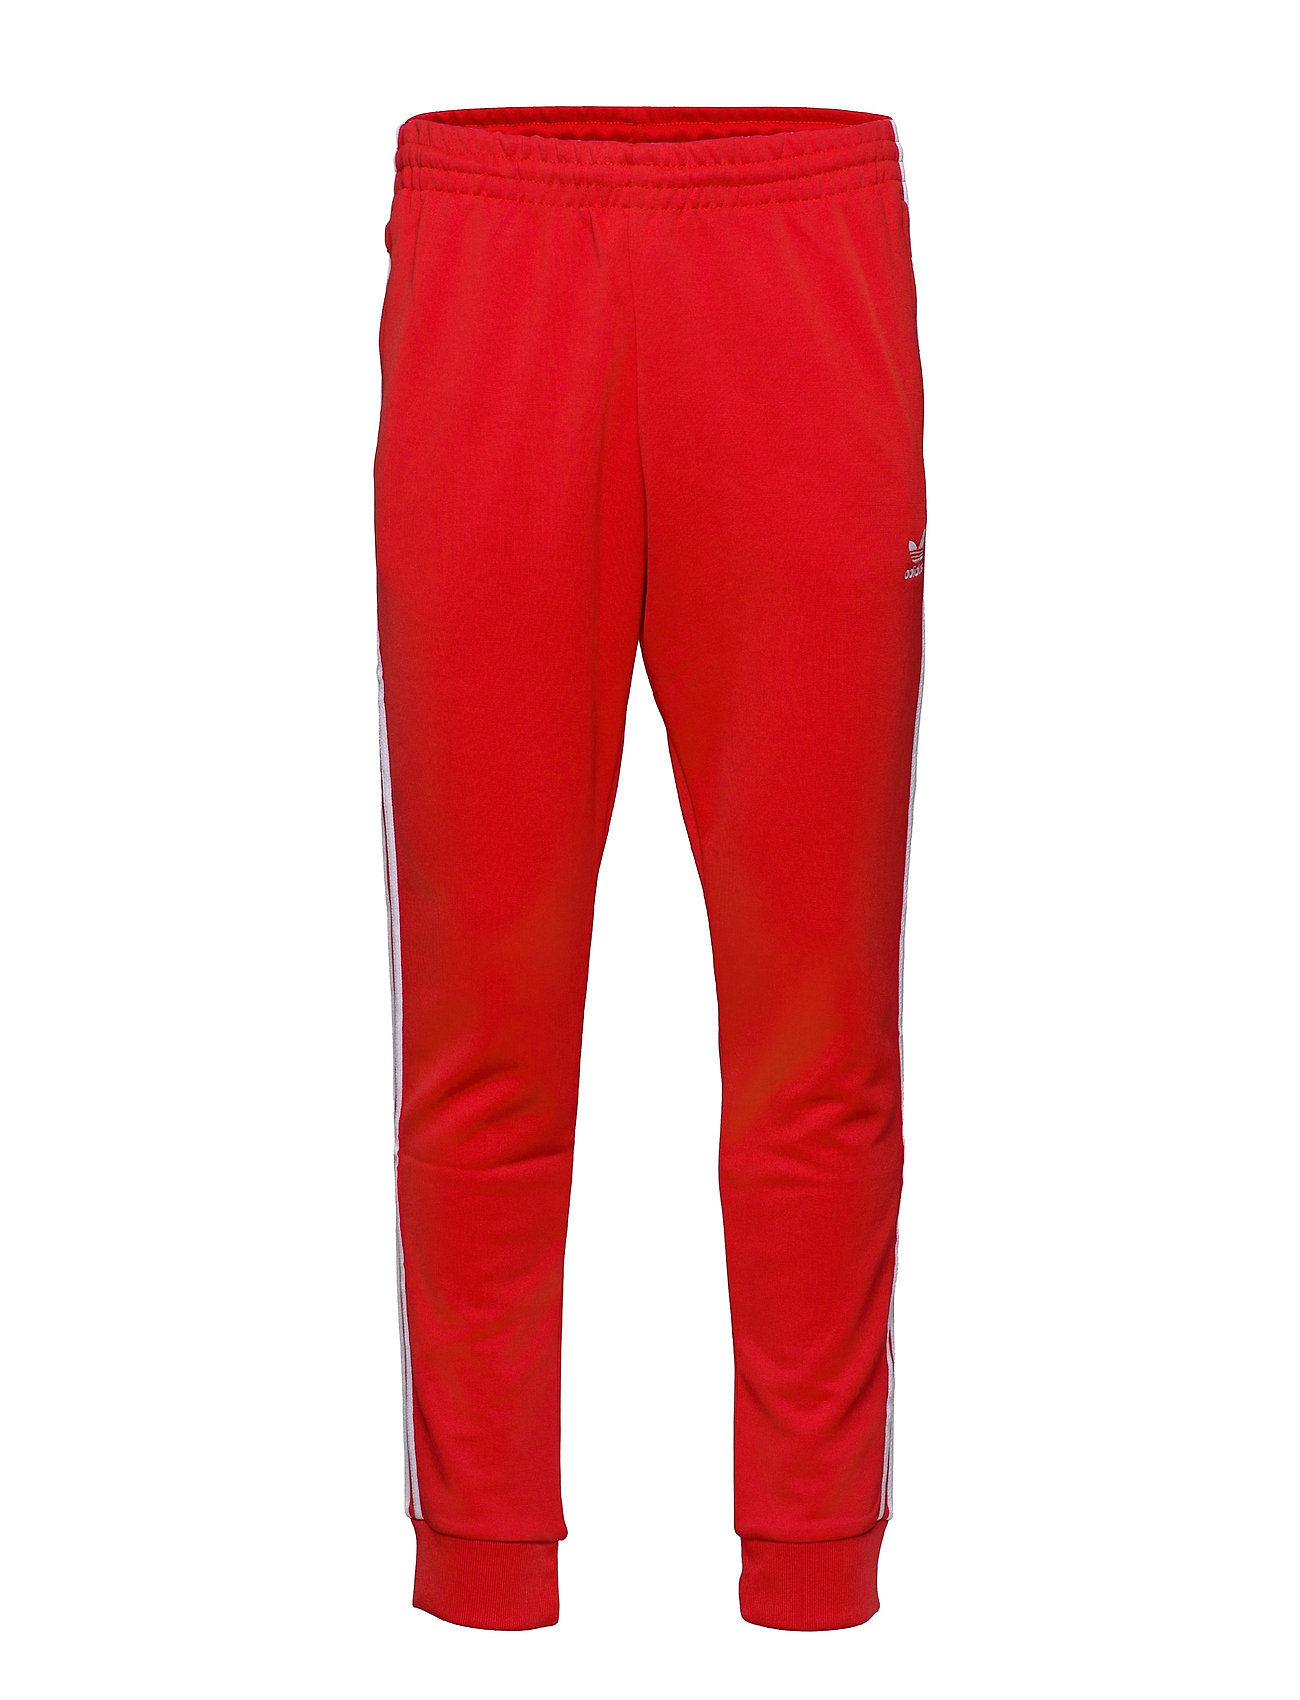 Adidas bukser – Adicolor Classics Superstar Track Pants Sweatpants Hyggebukser Rød Adidas Originals til herre i Rød - Pashion.dk